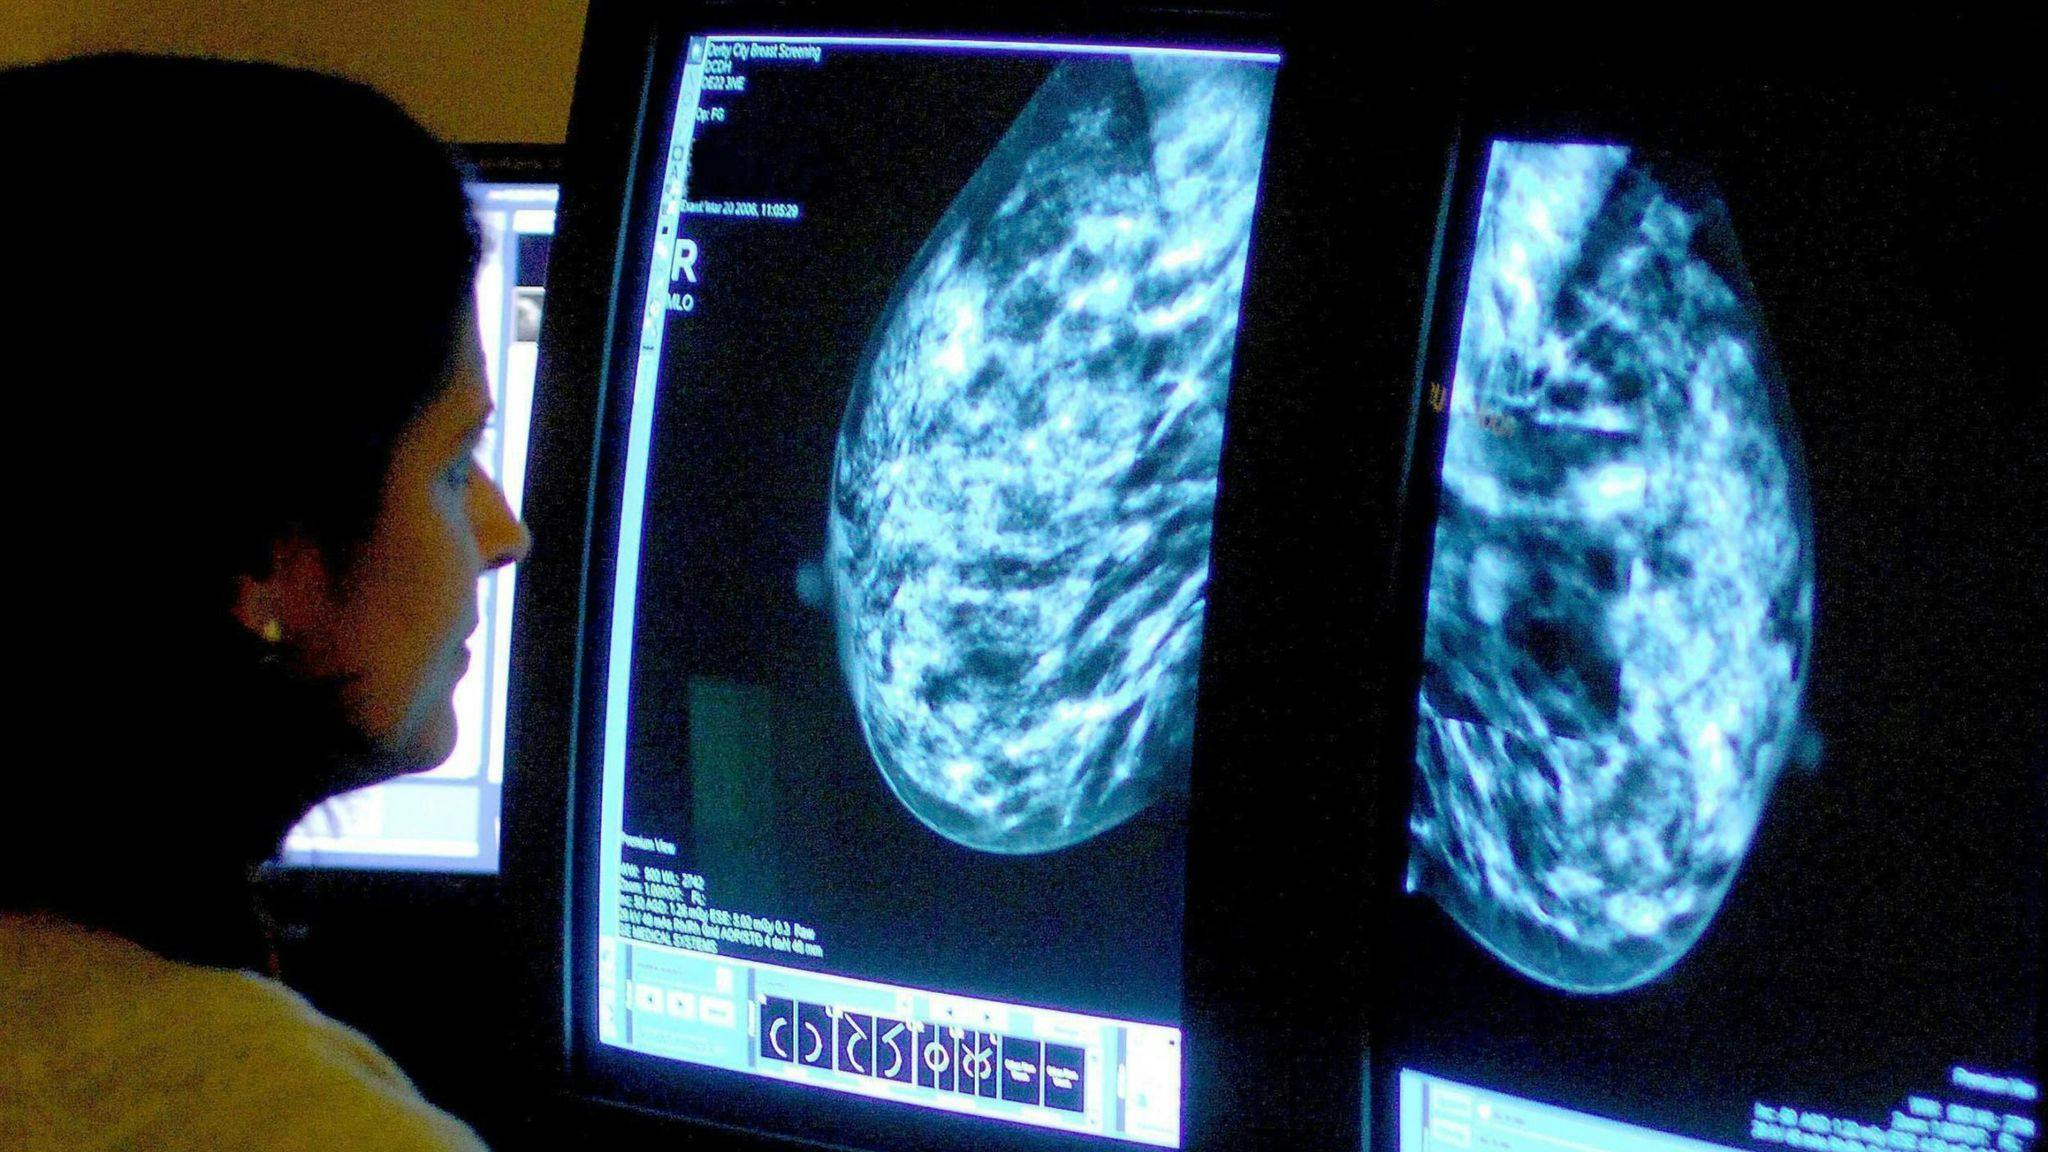 Mammogram images on screen